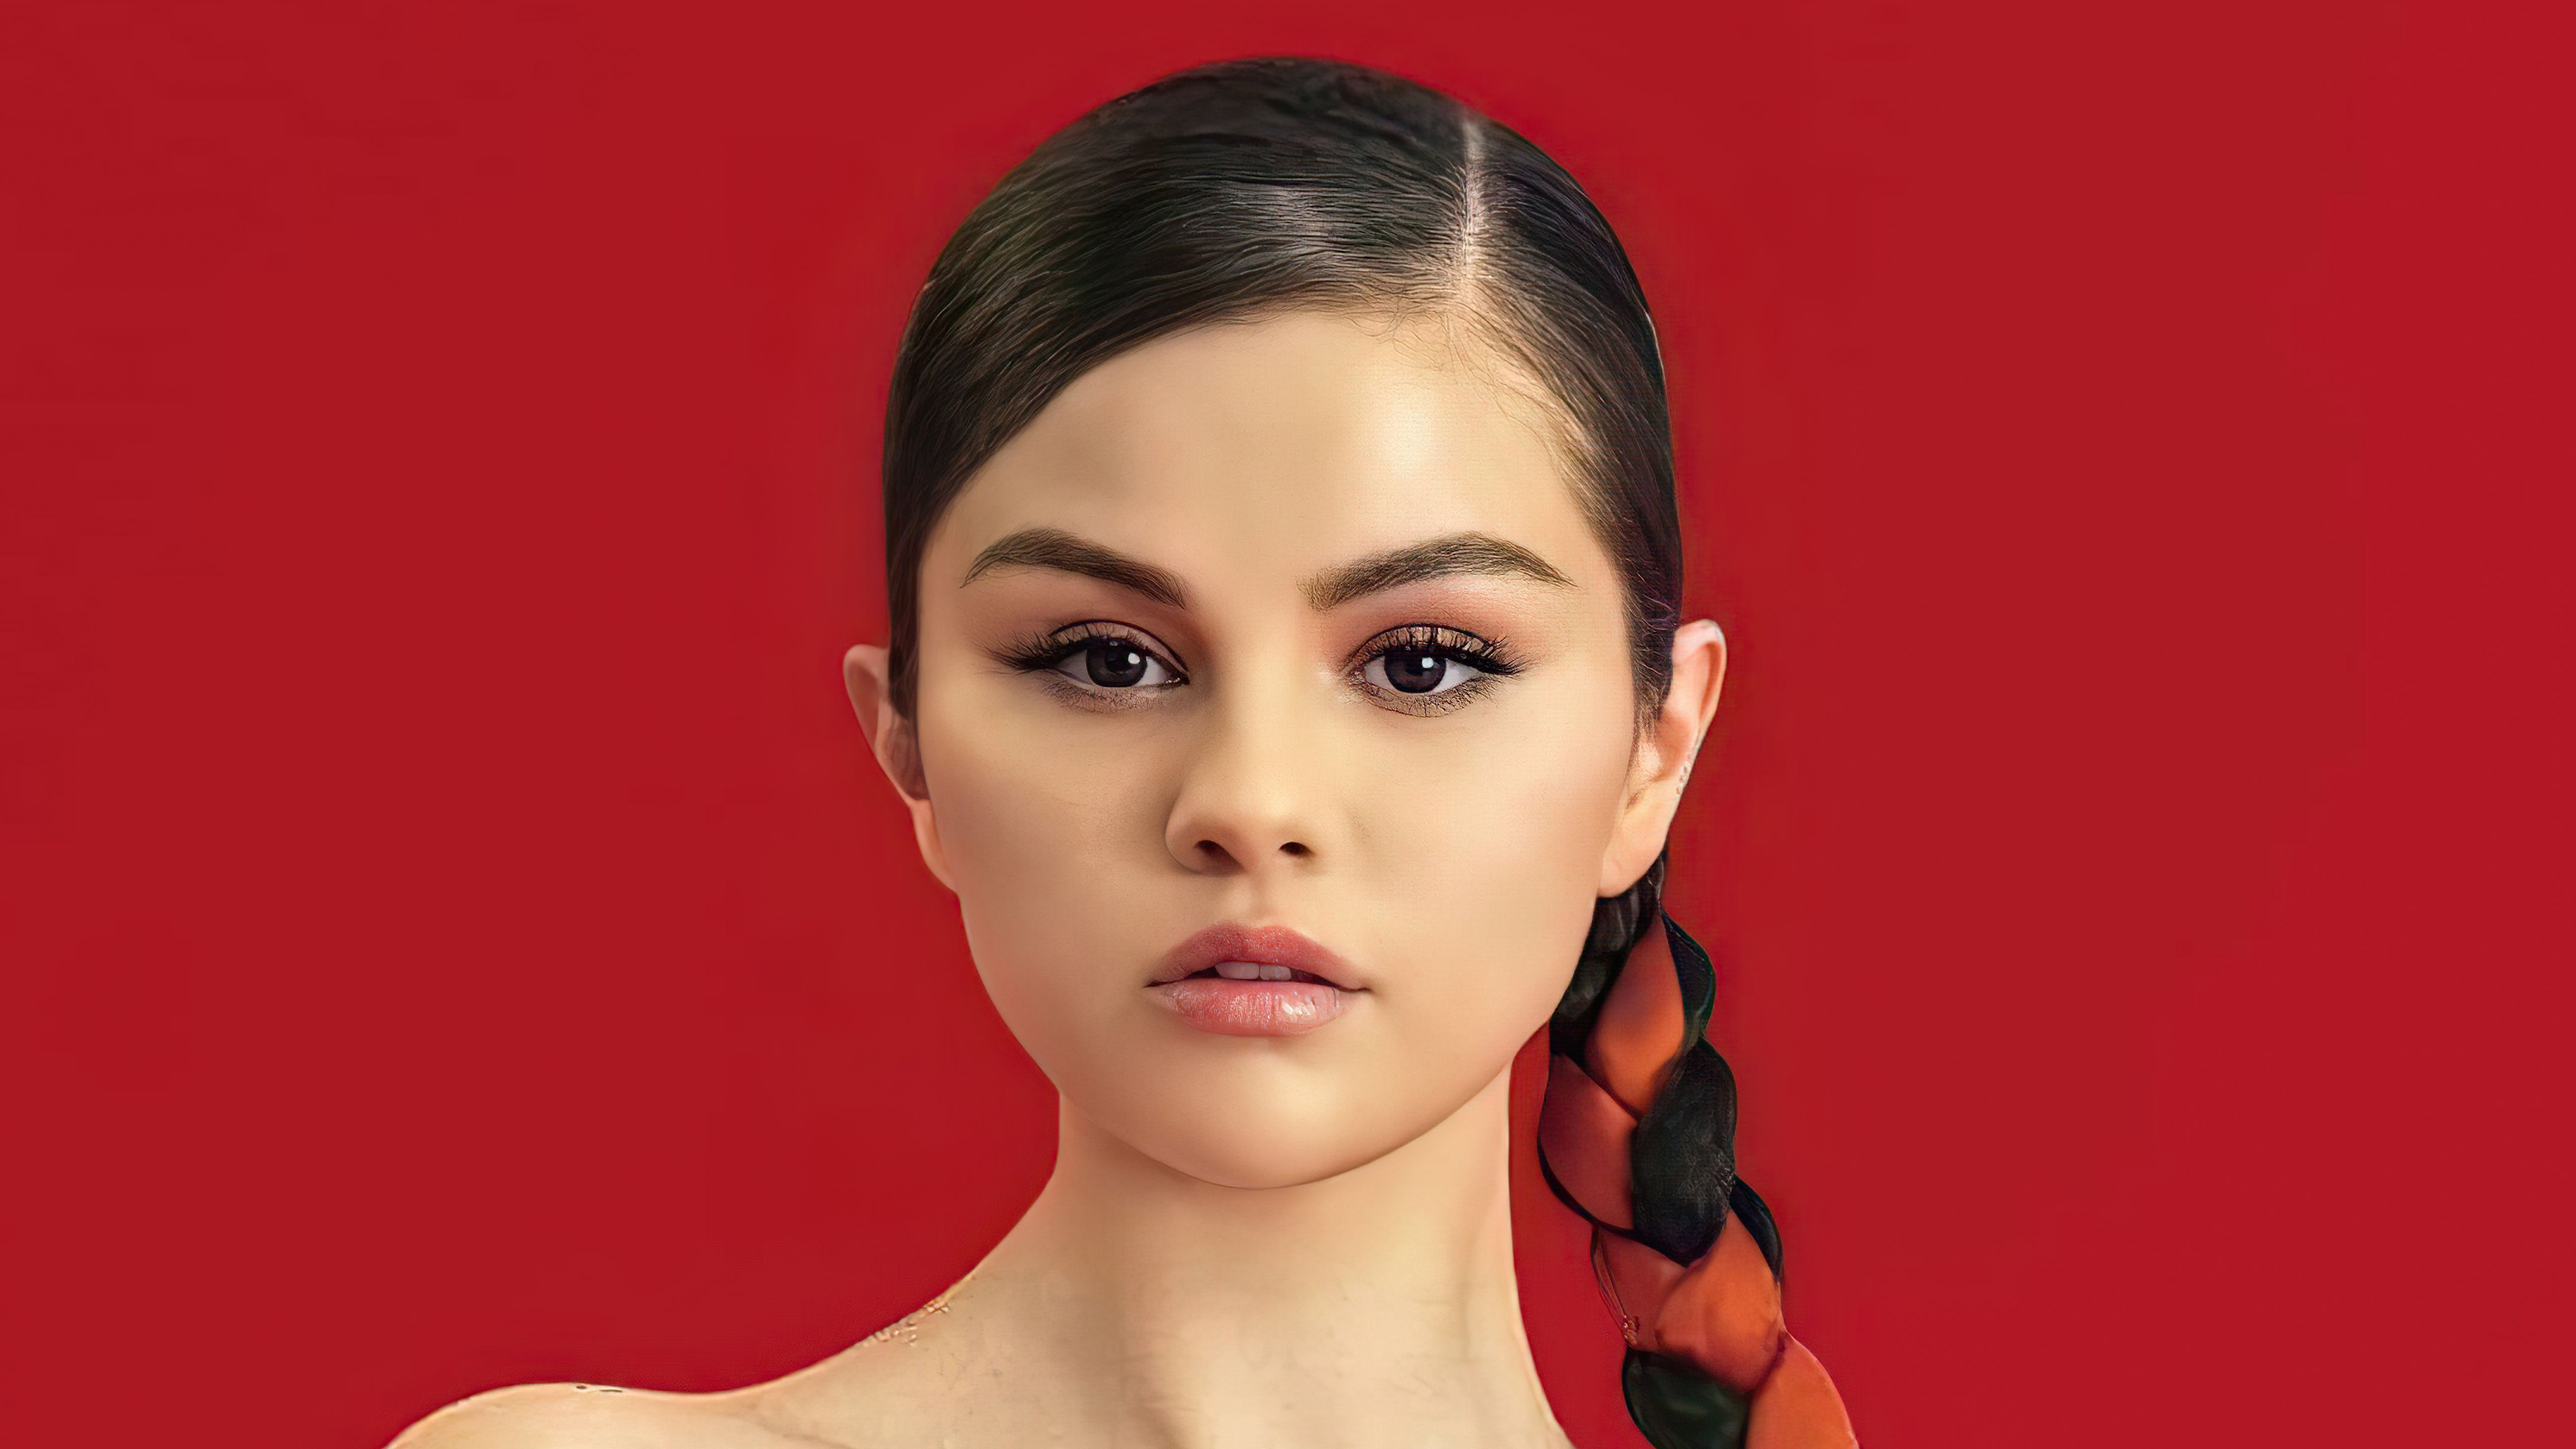 Selena Gomez Revelacion Album Photohoot 2021 5k 1400x1050 Resolution HD 4k Wallpaper, Image, Background, Photo and Picture